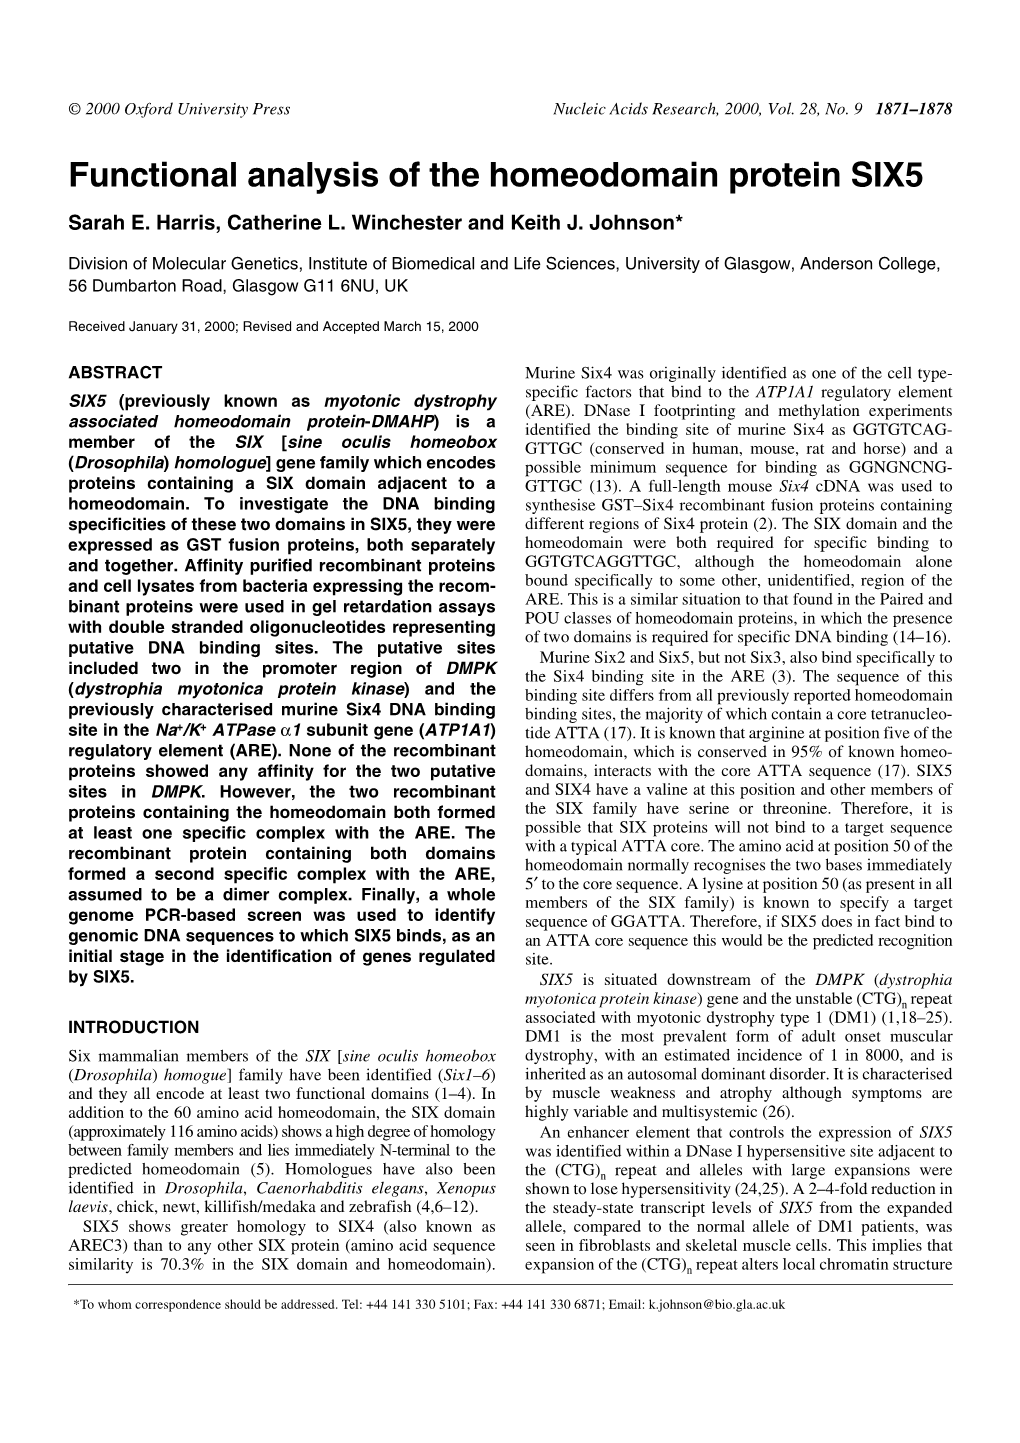 Functional Analysis of the Homeodomain Protein SIX5 Sarah E